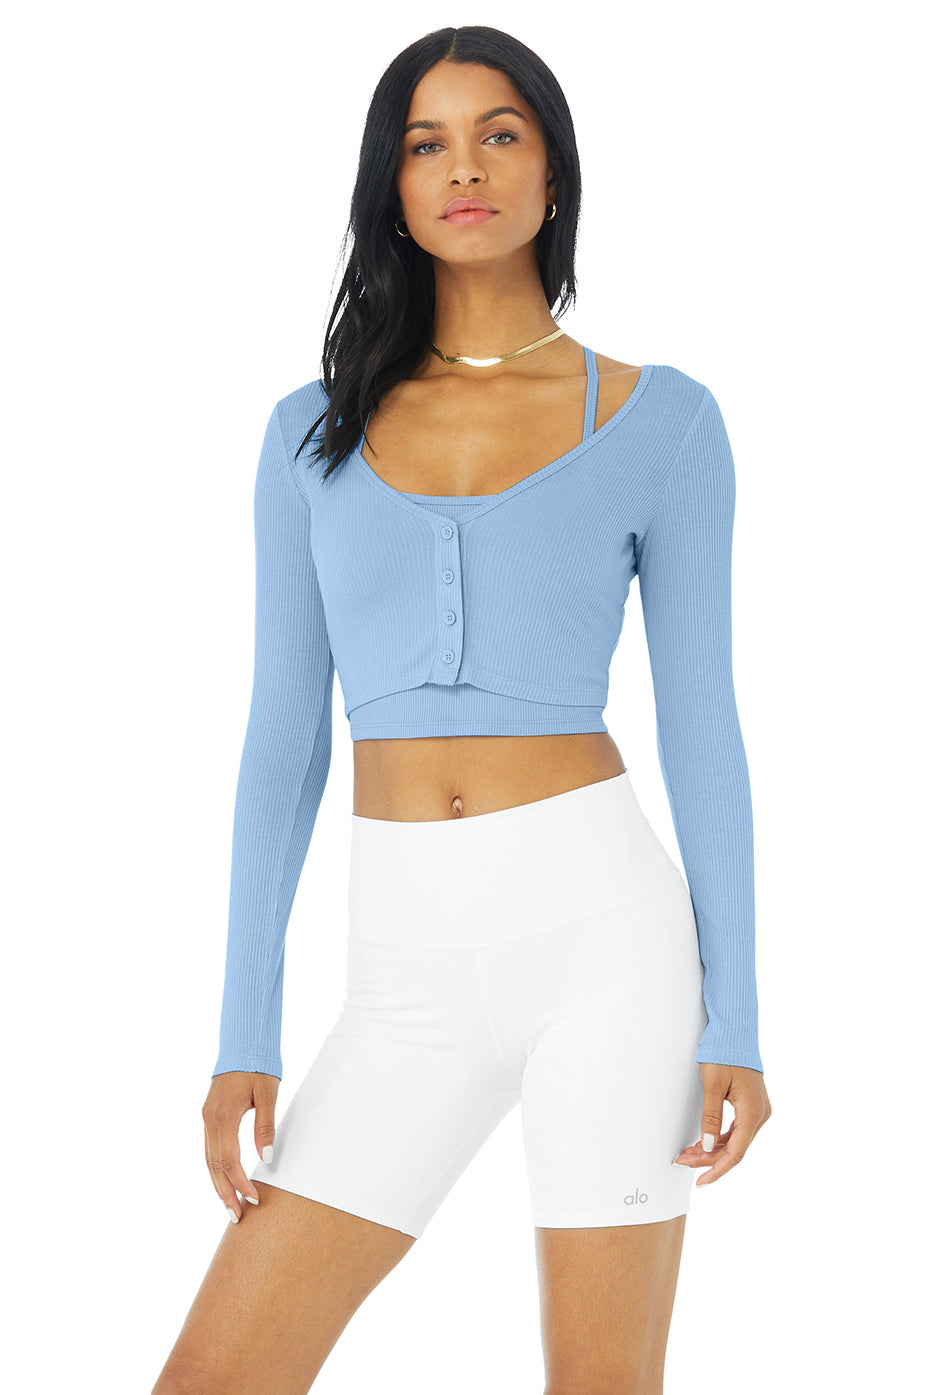 KendallJenner for @Alo 🎧 🍂 she wears the @AloYoga 'Breakaway Zip Up  Hoodie' ($108) + 'Splendor Bra' ($54) + 'High-Waist